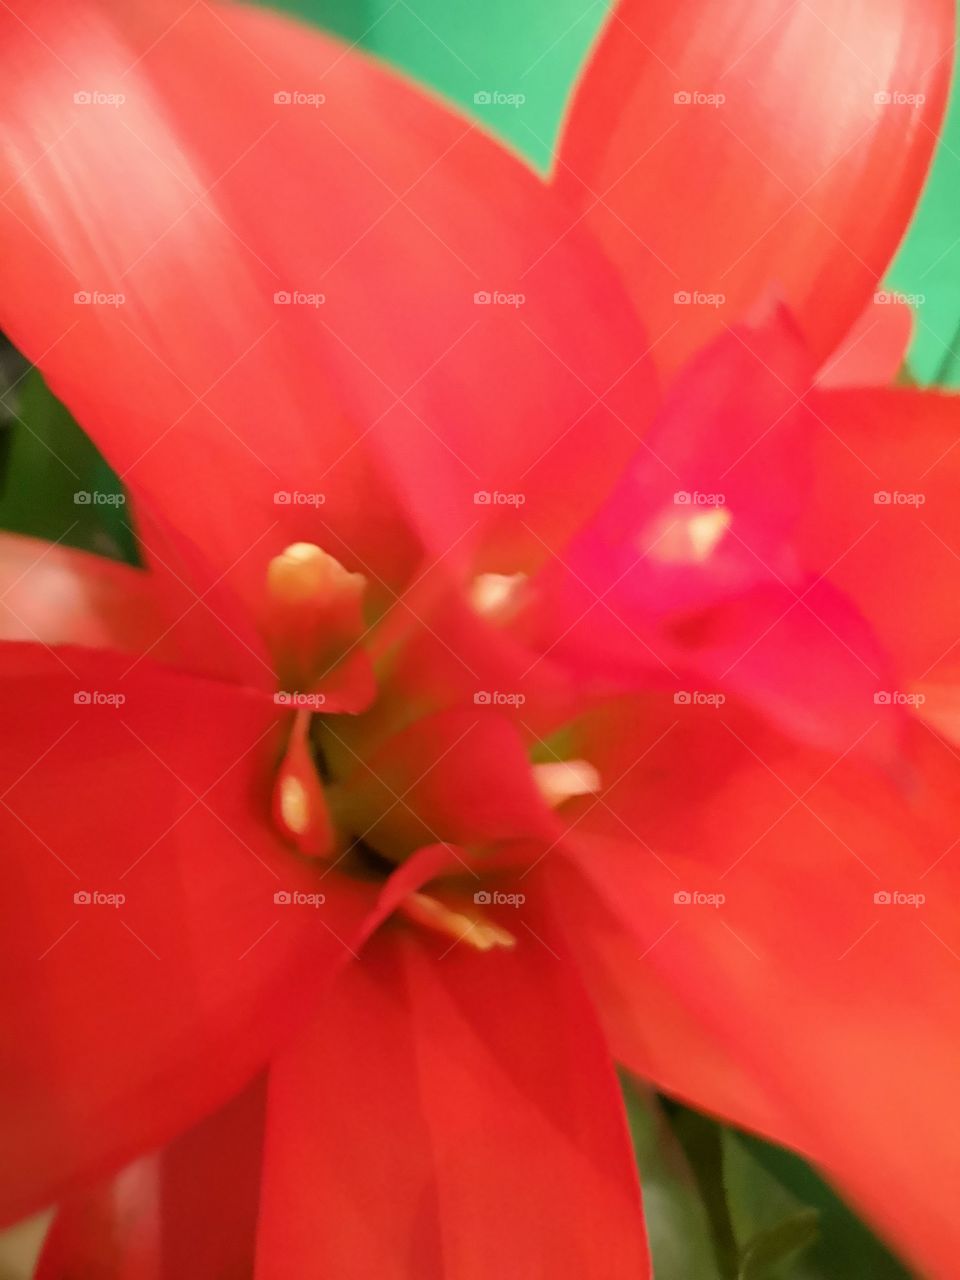 02-11-18 Red Flower 3